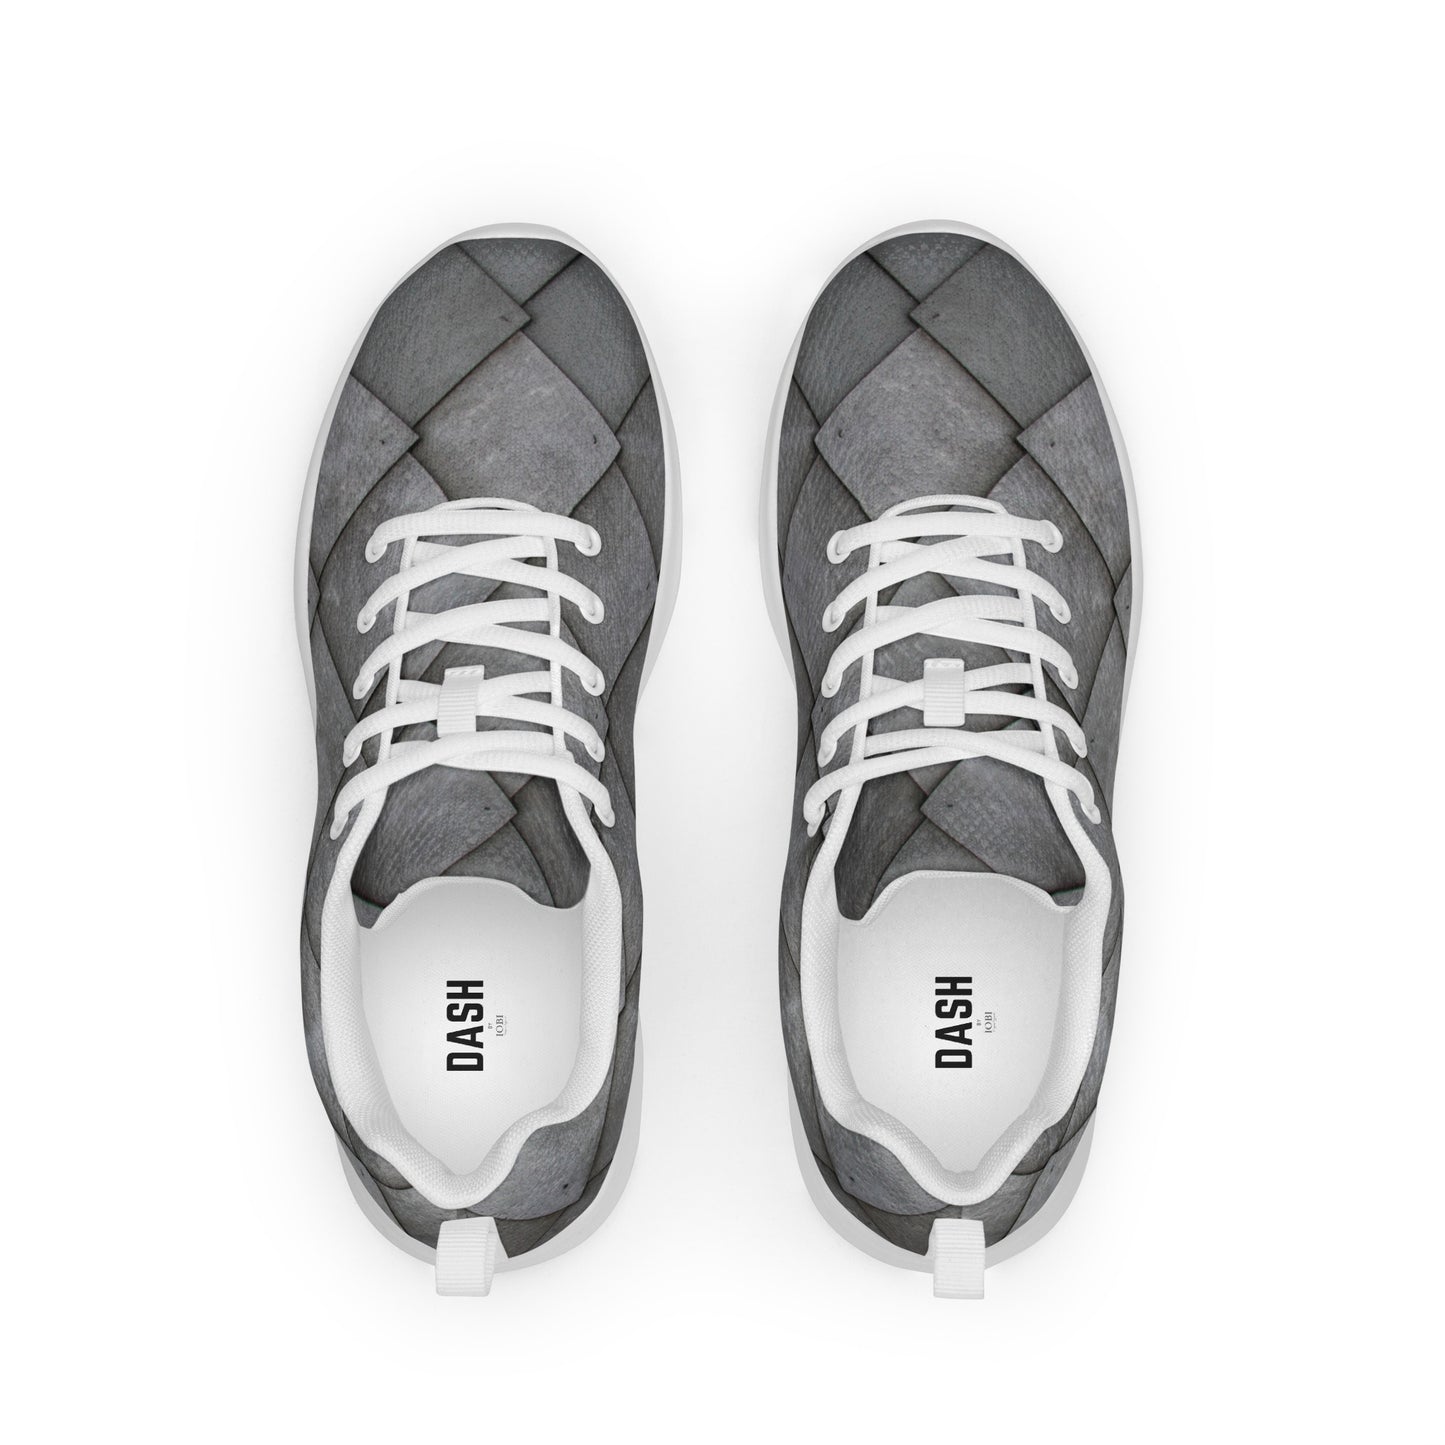 DASH Armour Men’s Athletic Shoes Lightweight Breathable Design by IOBI Original Apparel